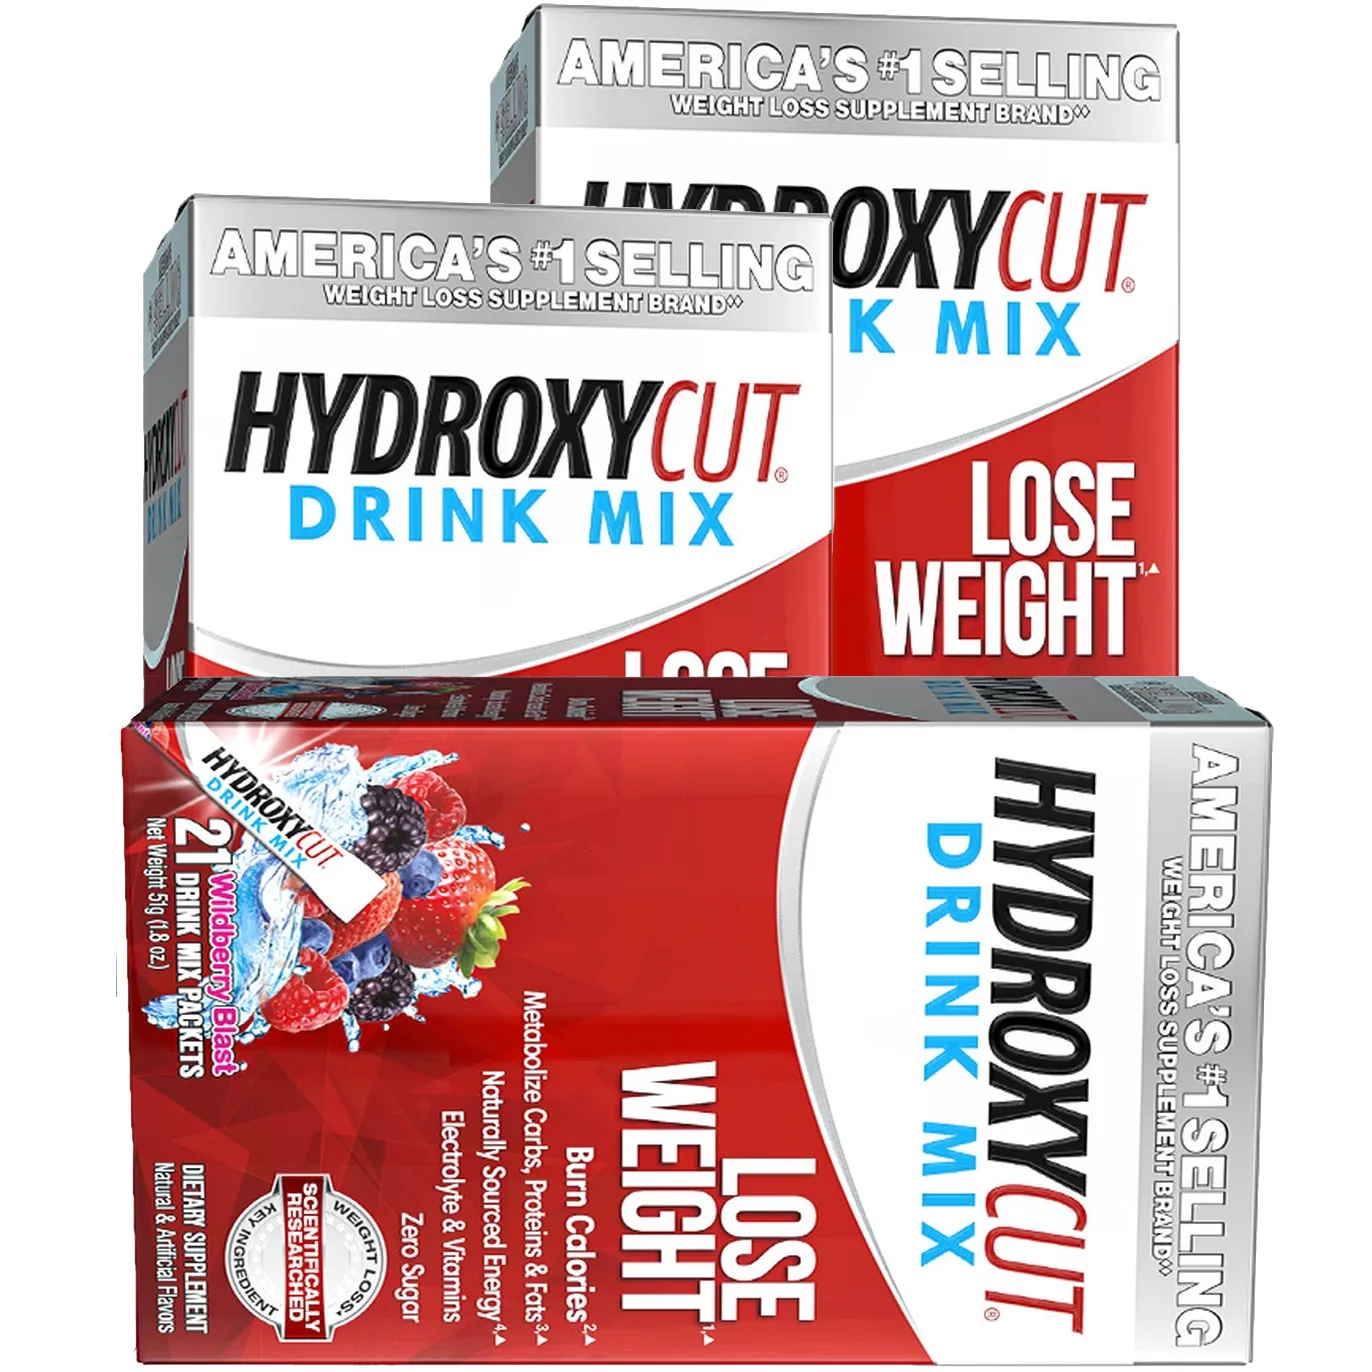 Free Hydroxycut Drink Mix At Walmart